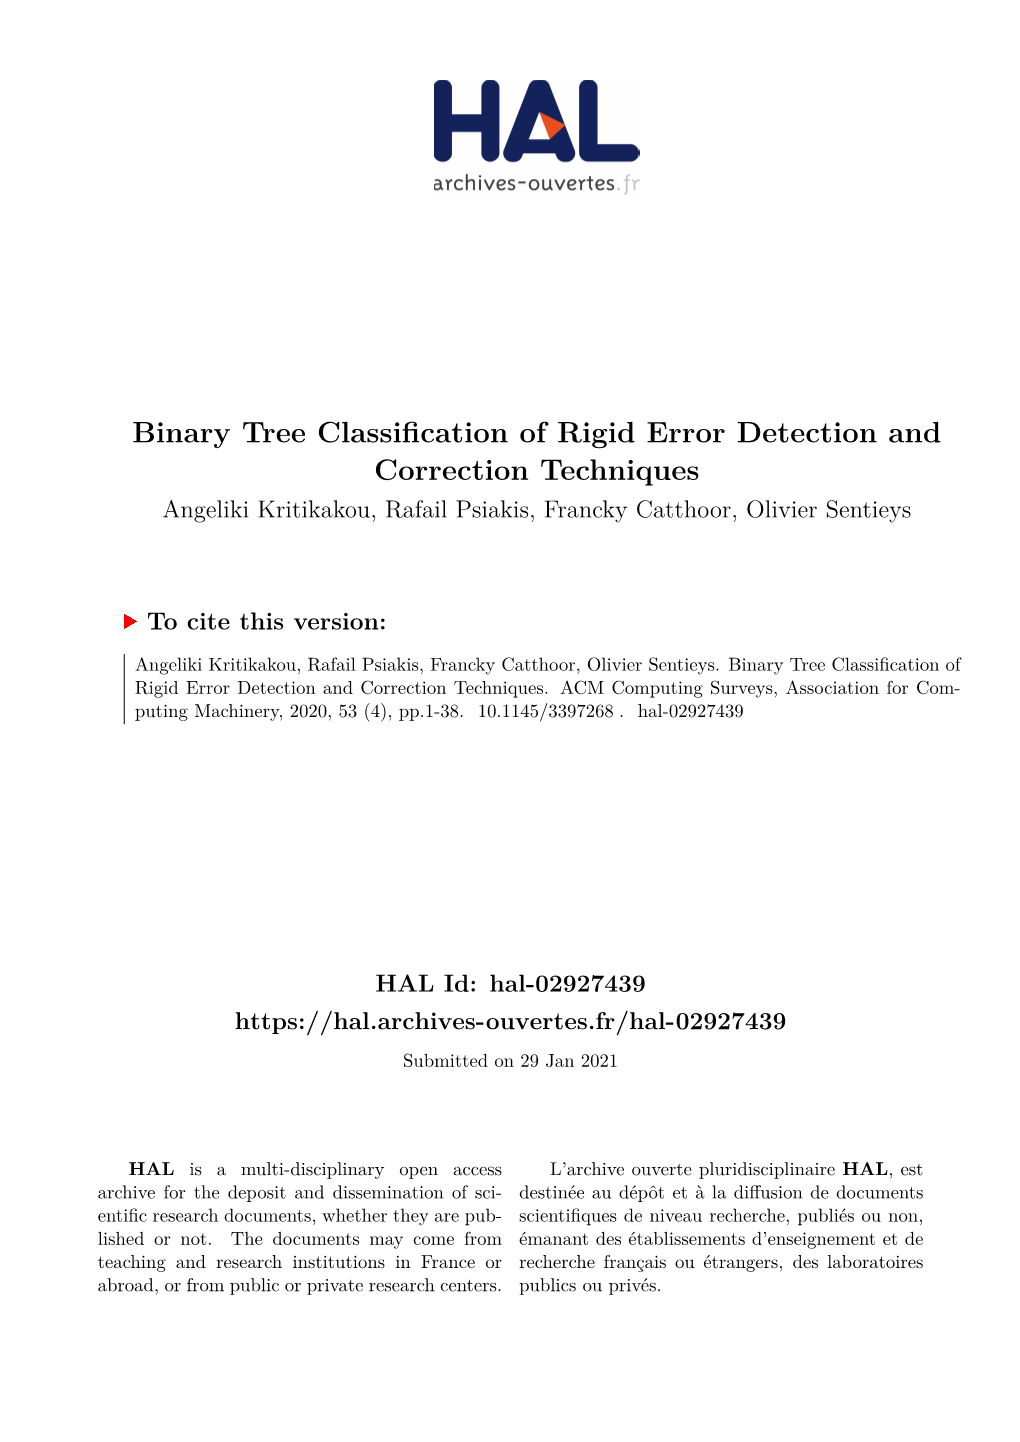 Binary Tree Classification of Rigid Error Detection and Correction Techniques Angeliki Kritikakou, Rafail Psiakis, Francky Catthoor, Olivier Sentieys